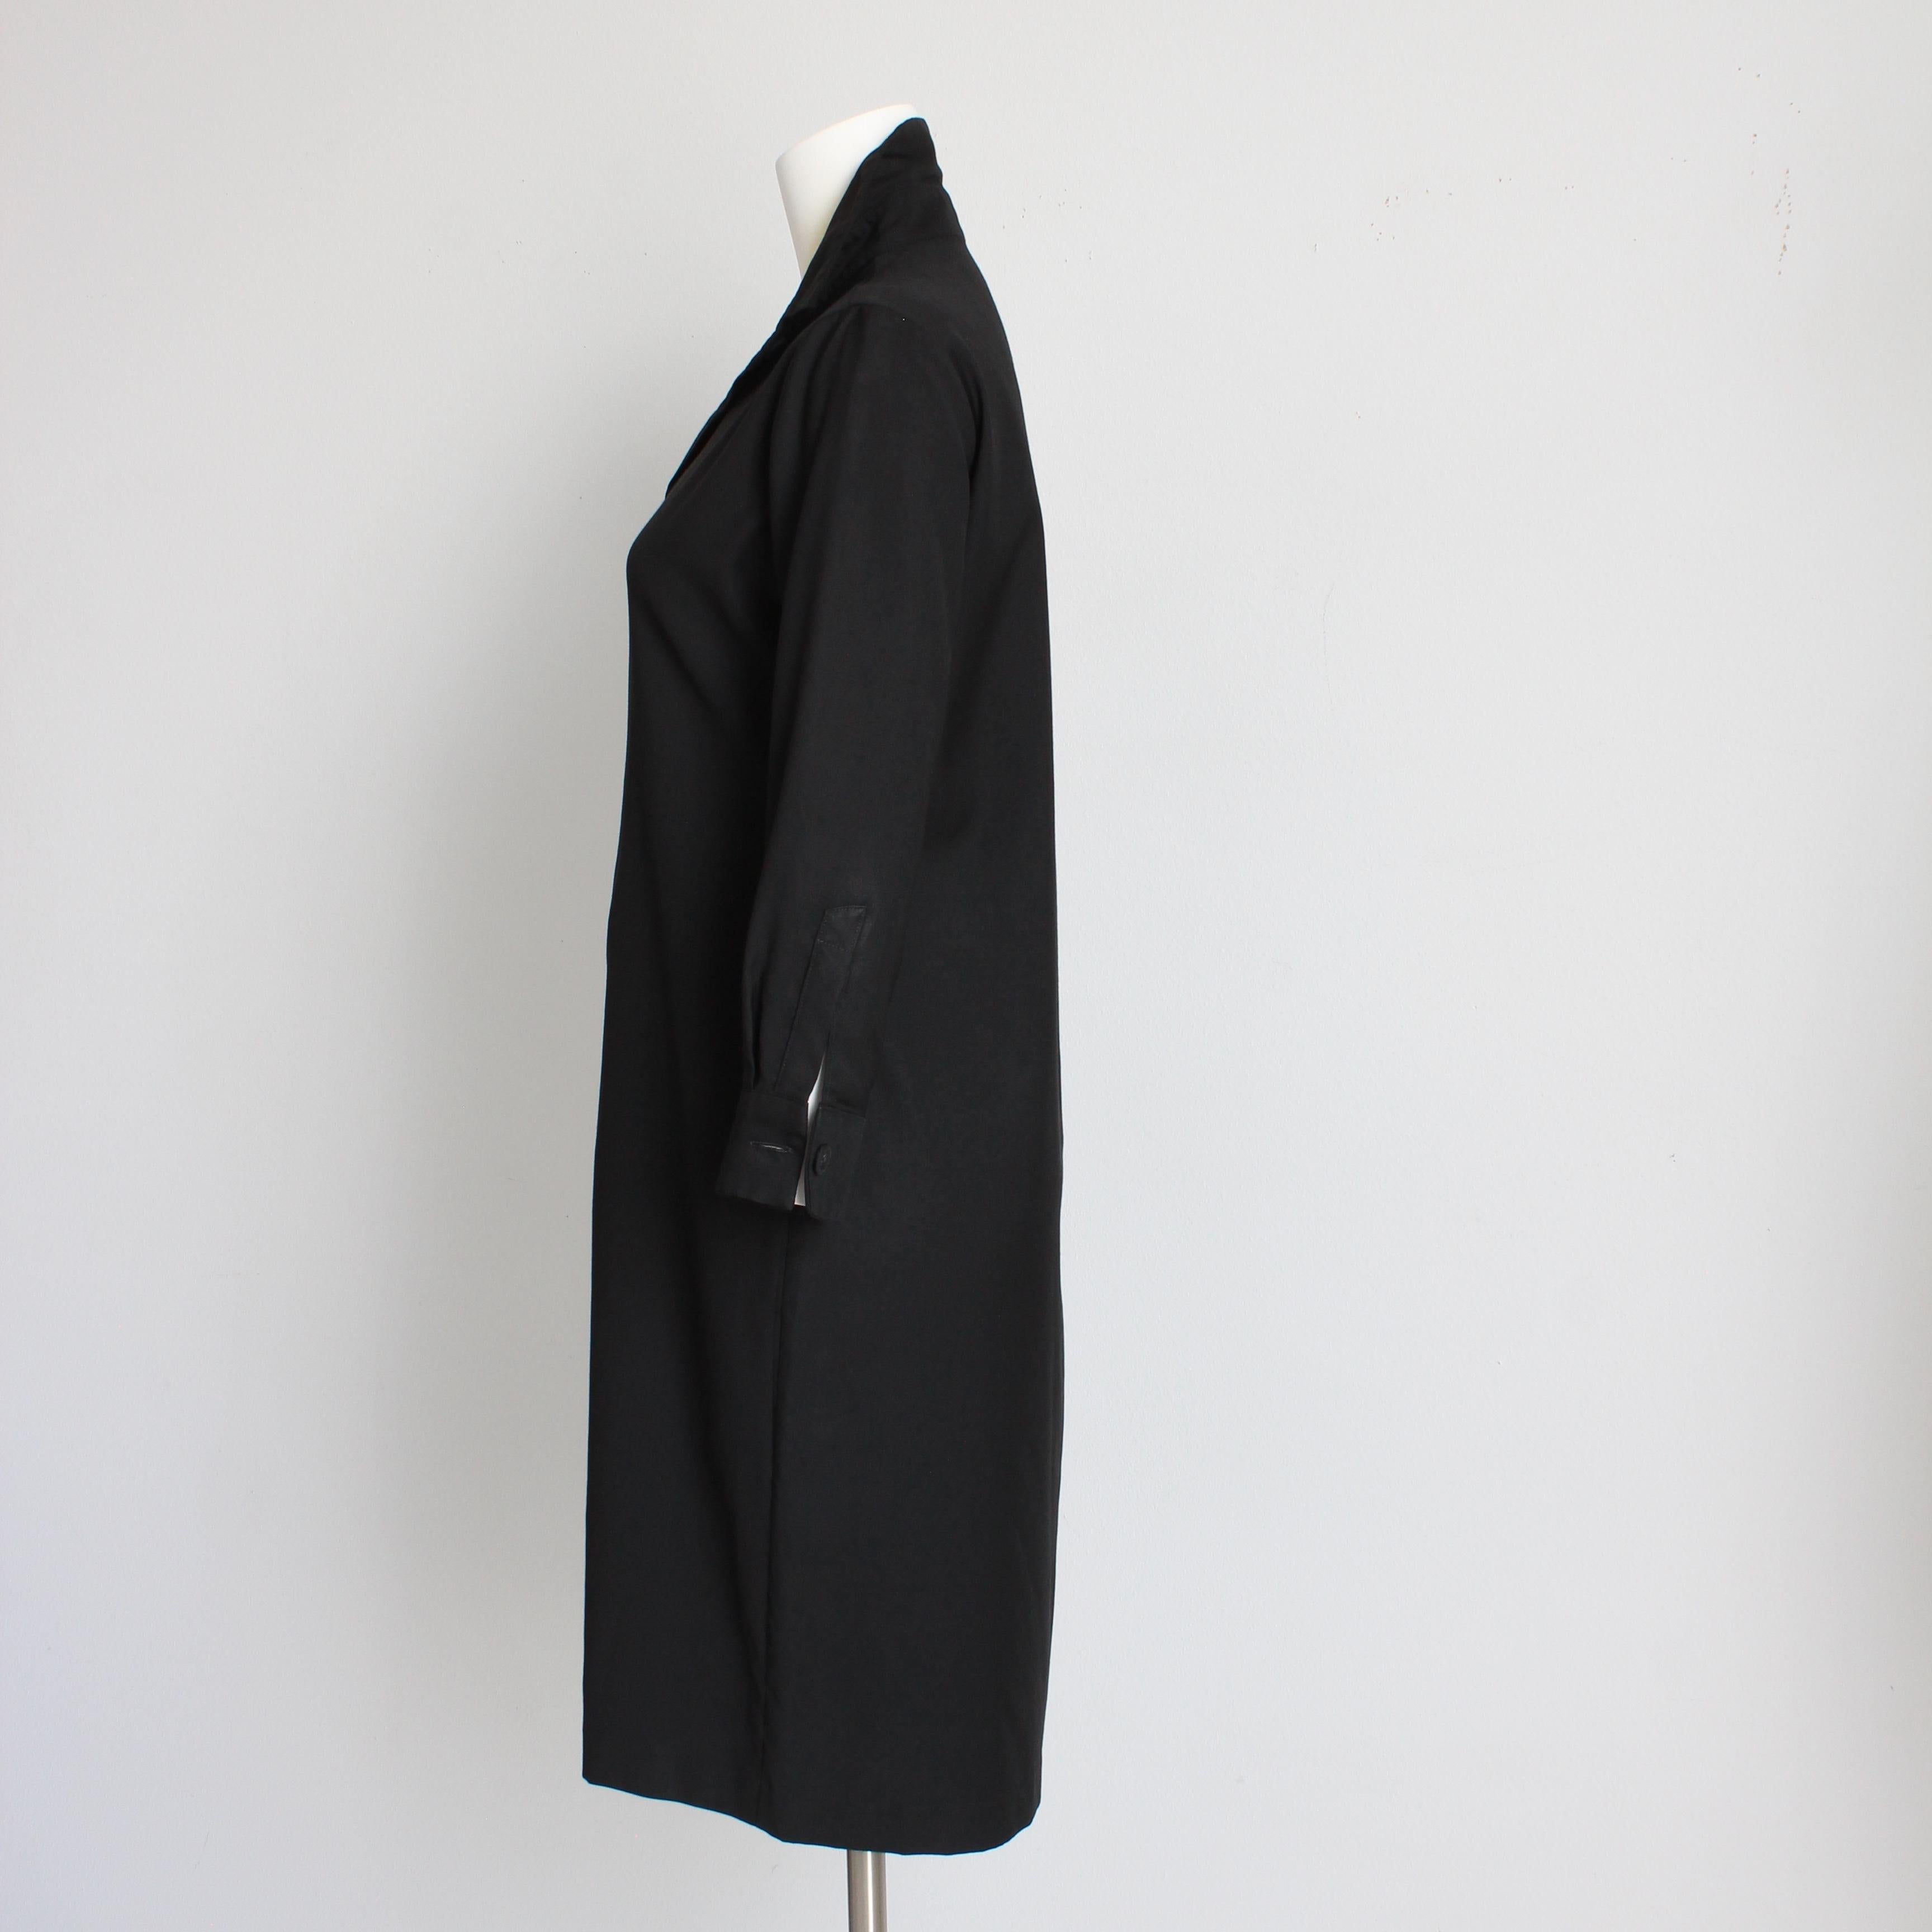 Bottega Veneta Dress Black Wool Twill Shirtwaist LBD Button Front Sz 42 Italy For Sale 4